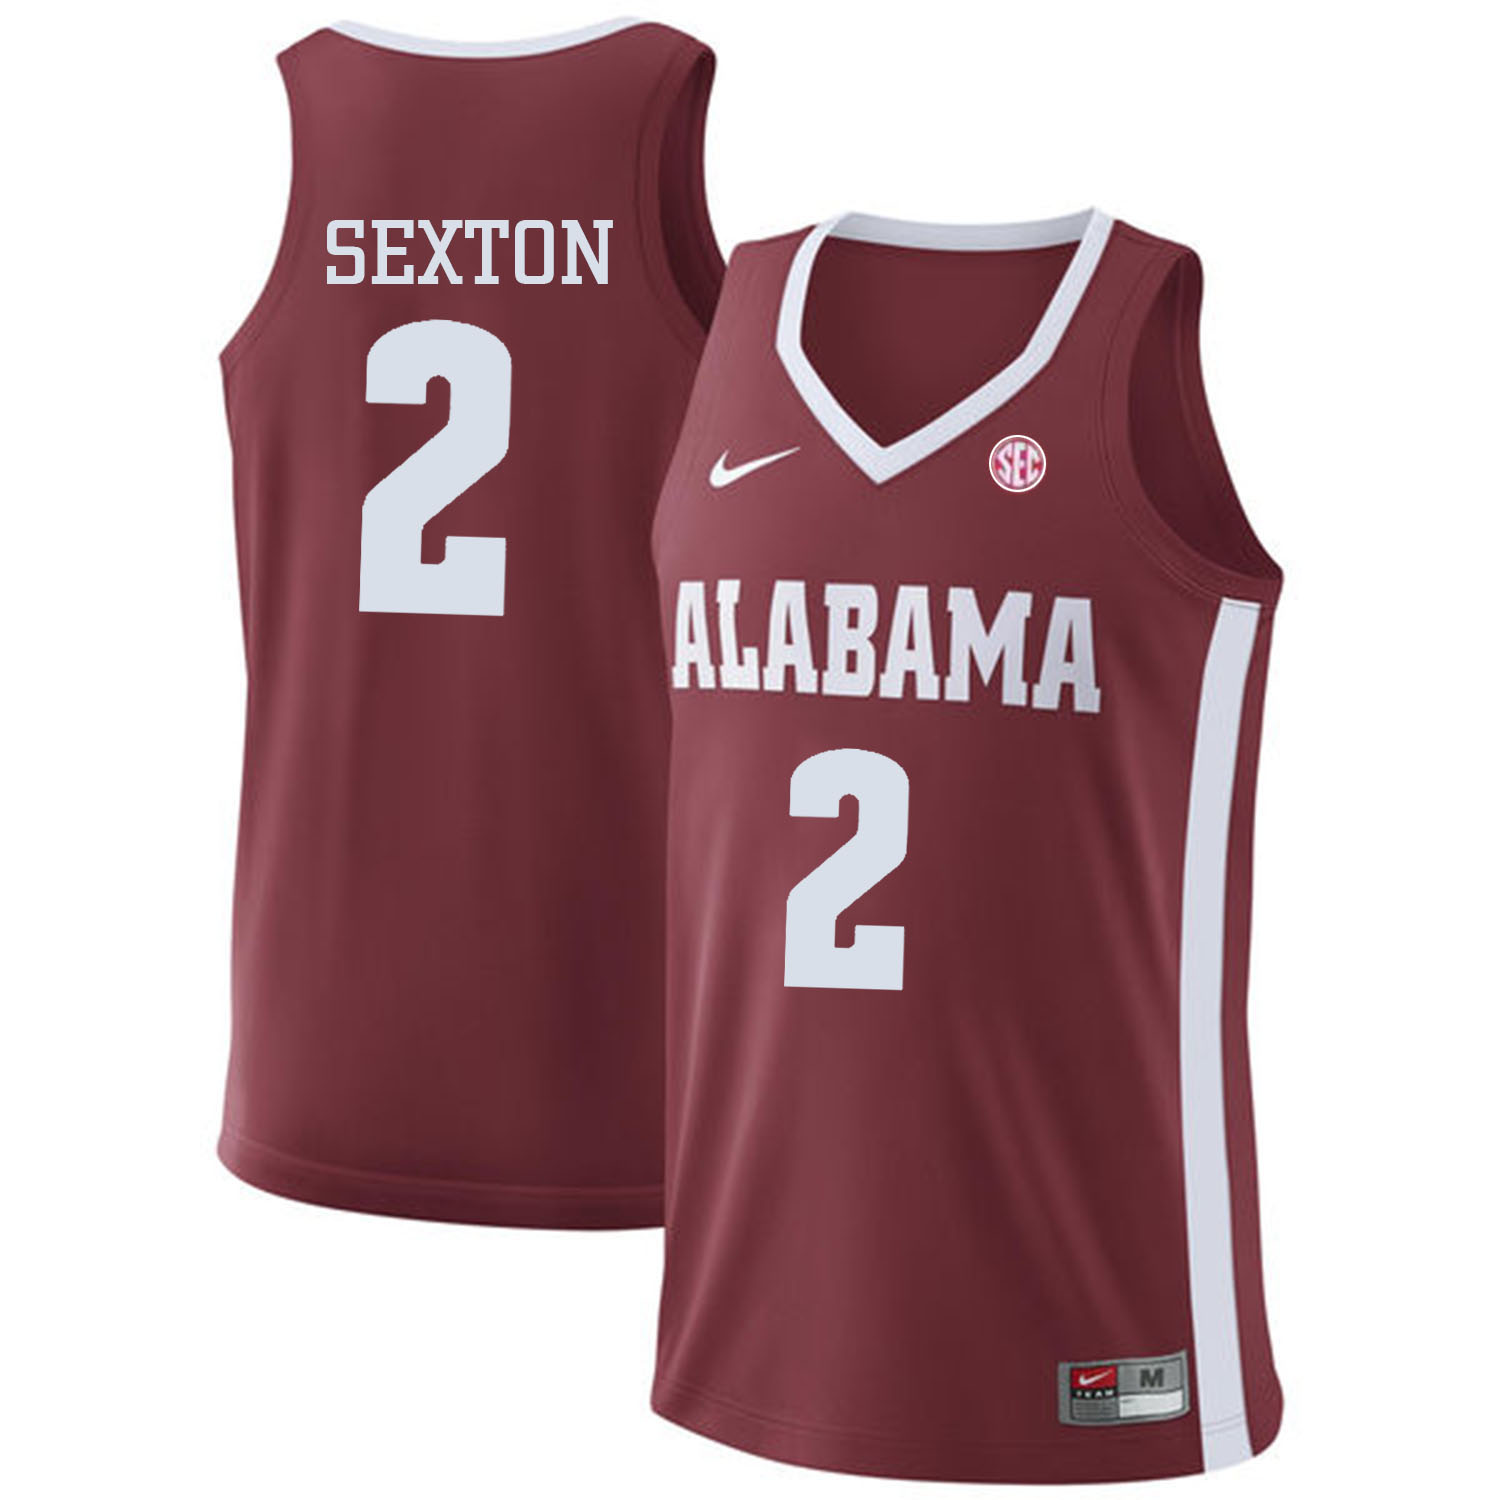 Alabama Crimson Tide 2 Collin Sexton Red College Basketball Jersey